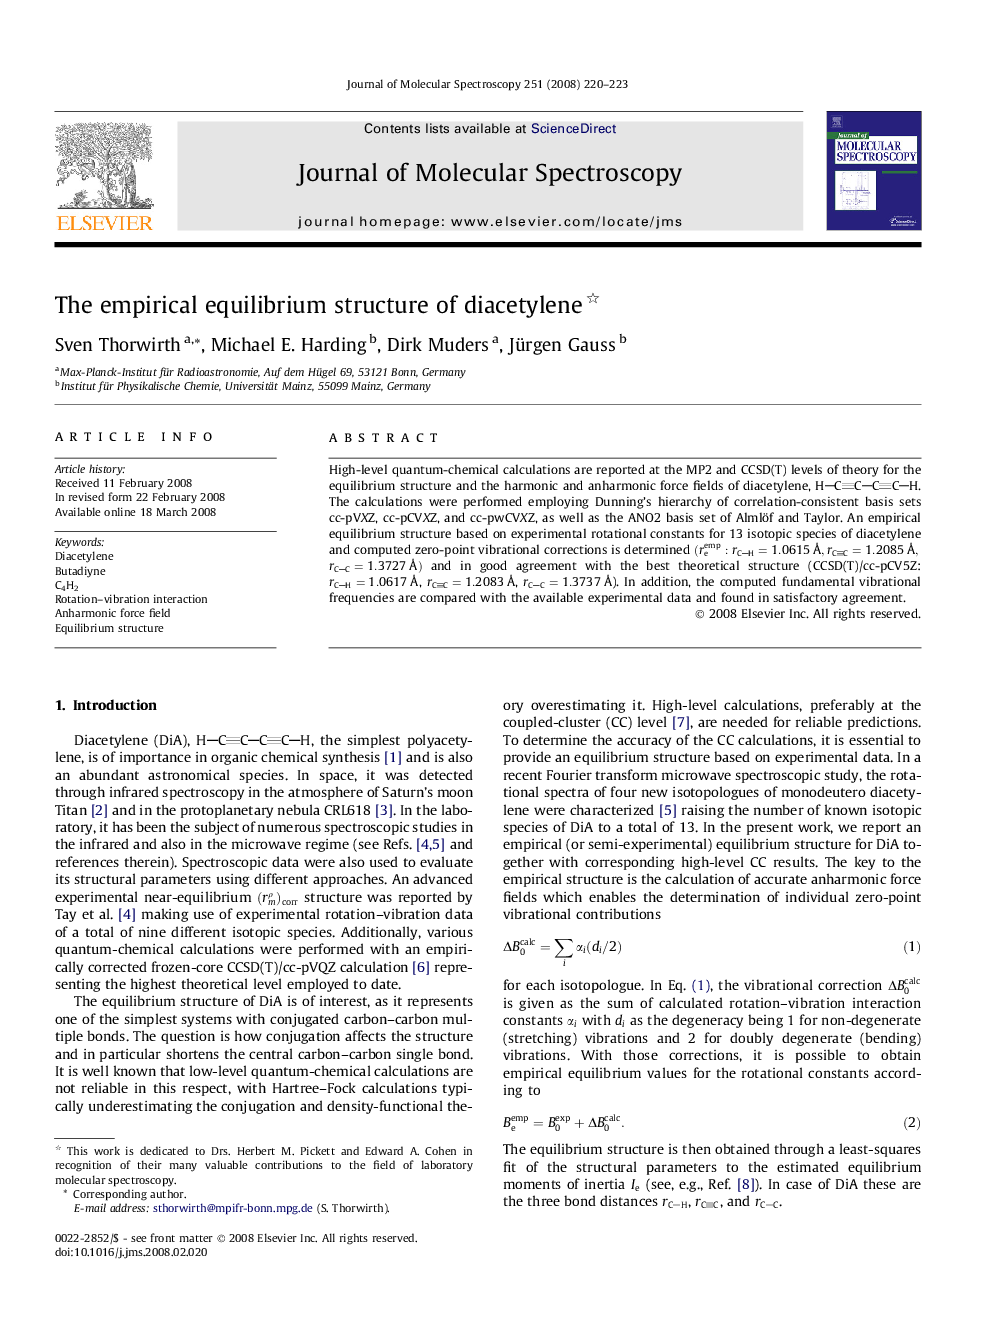 The empirical equilibrium structure of diacetylene